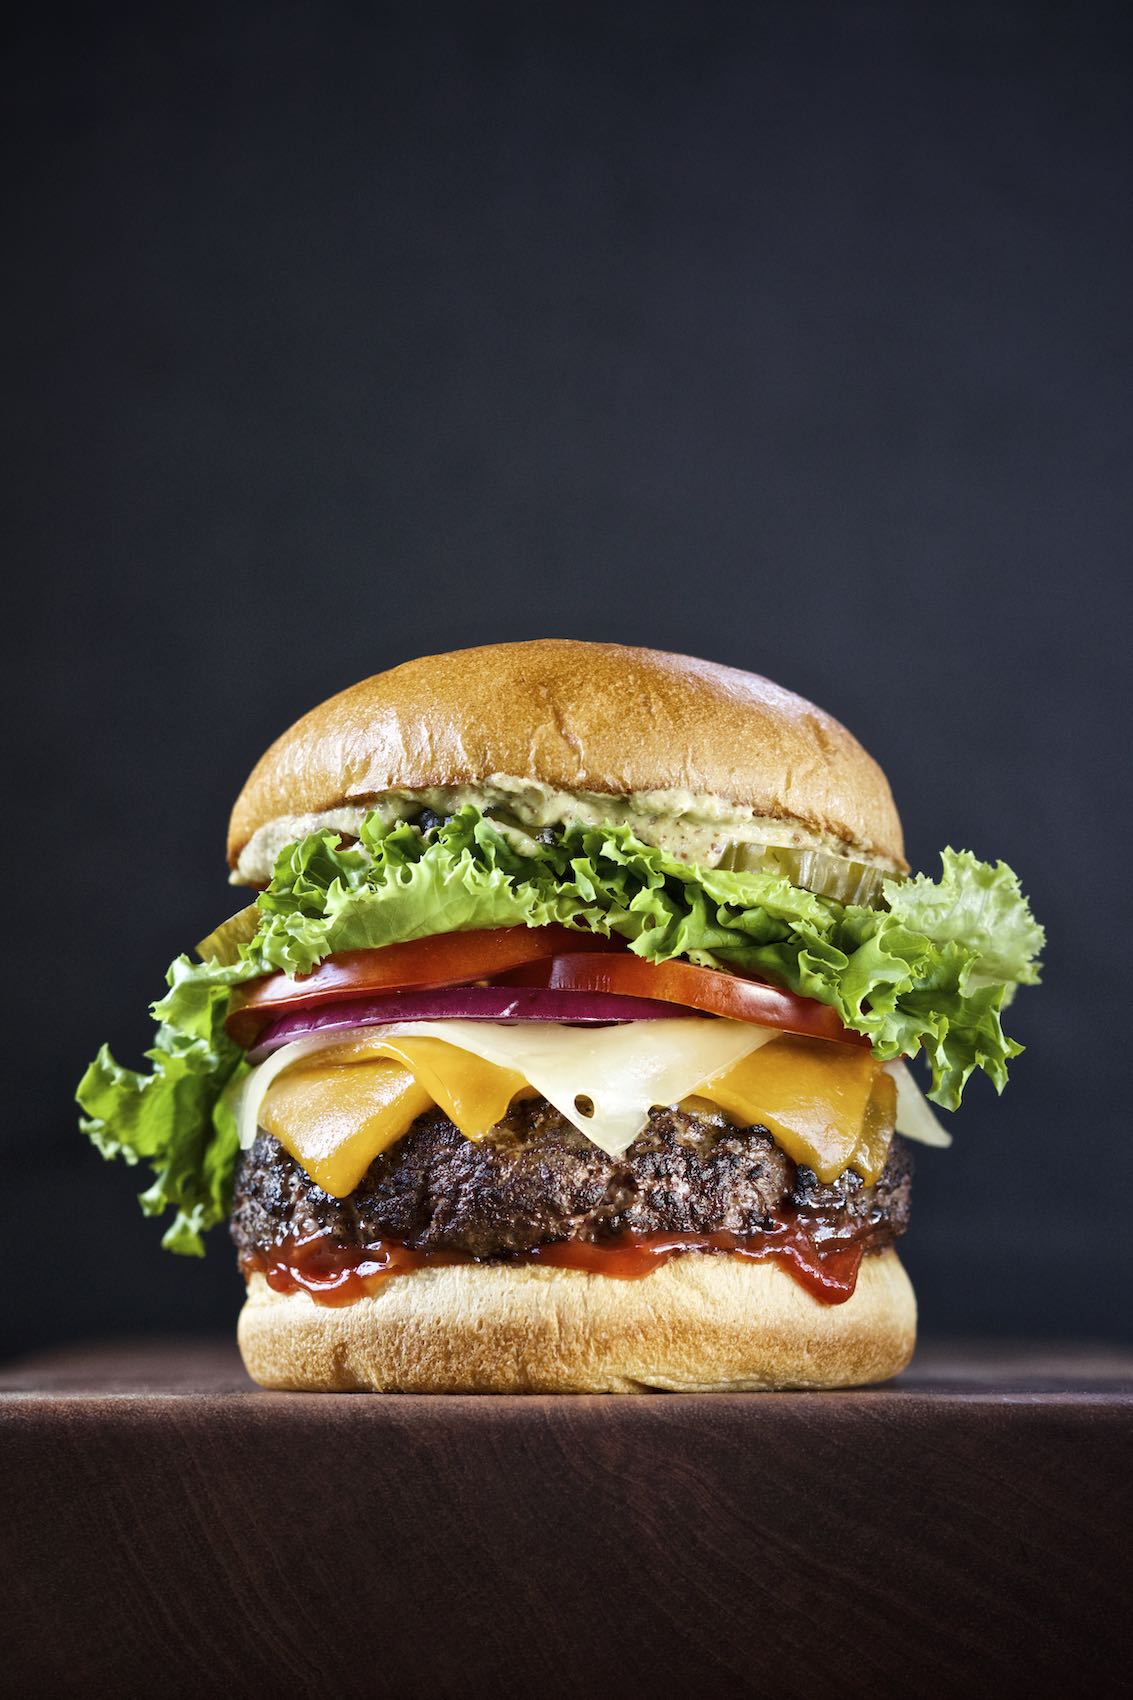 Jody Horton Photography - Classic layered cheeseburger shot for Organic Valley.